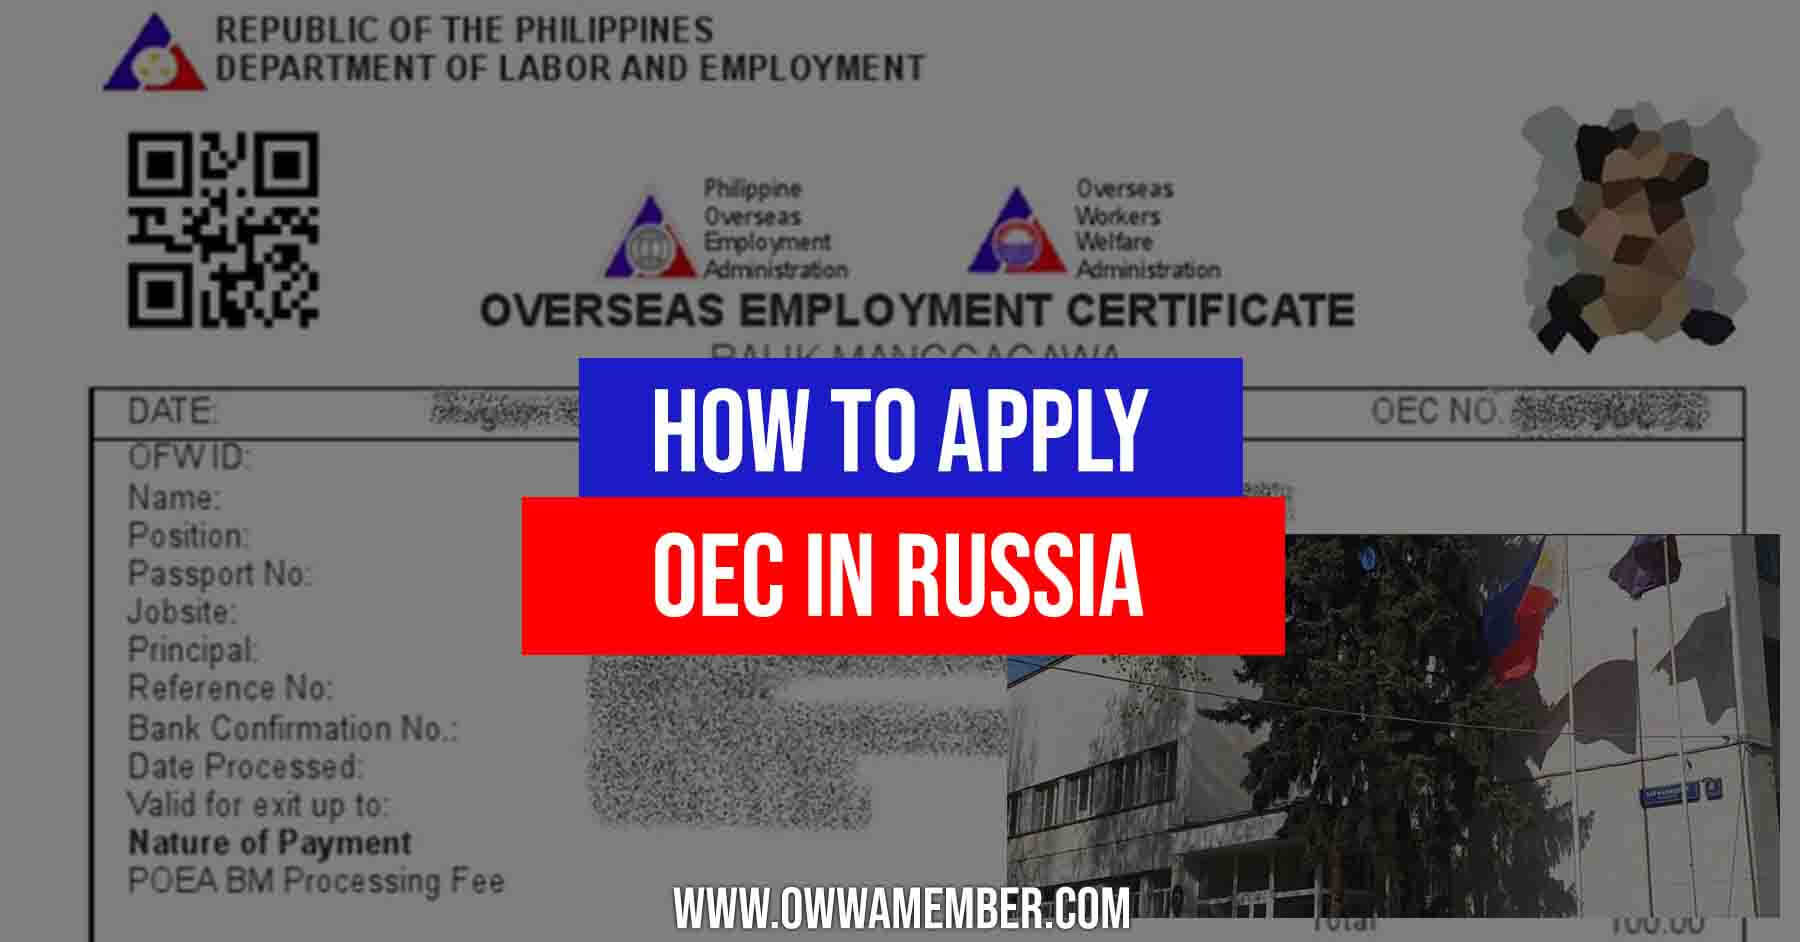 oec overseas employment certificate balik manggagawa ofw in russia